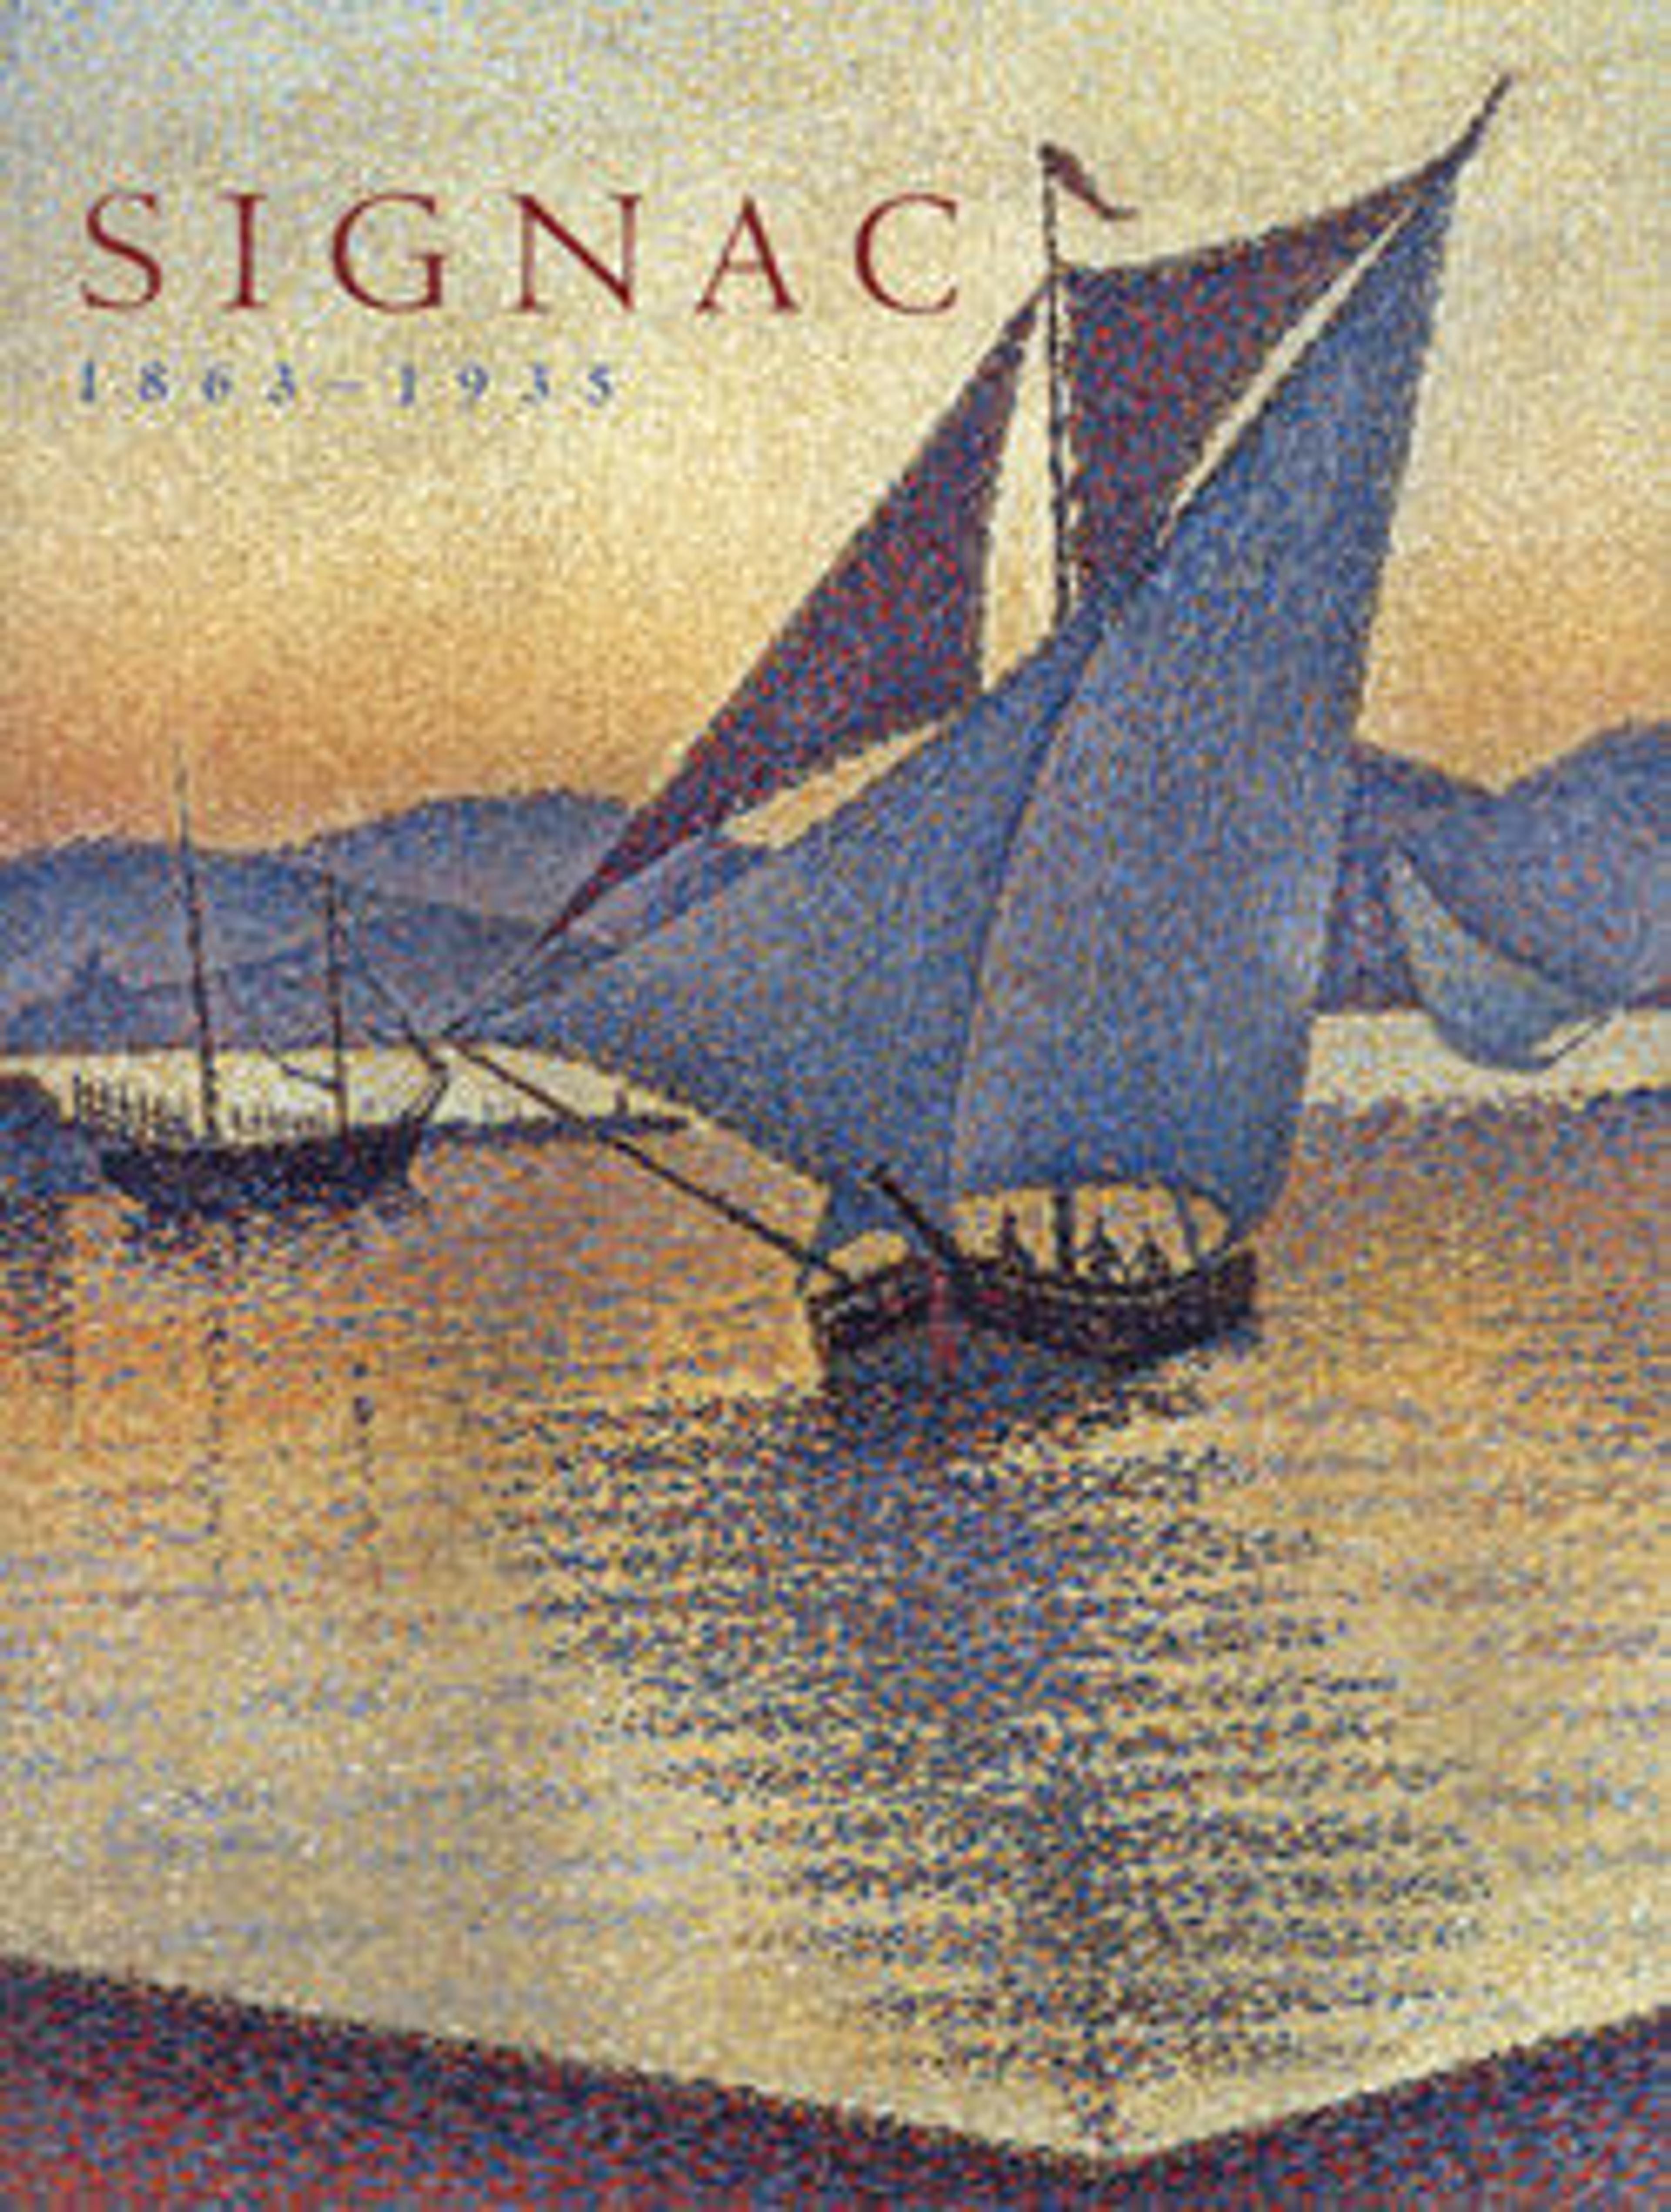 Signac, 1863-1935: Master Neo-Impressionist